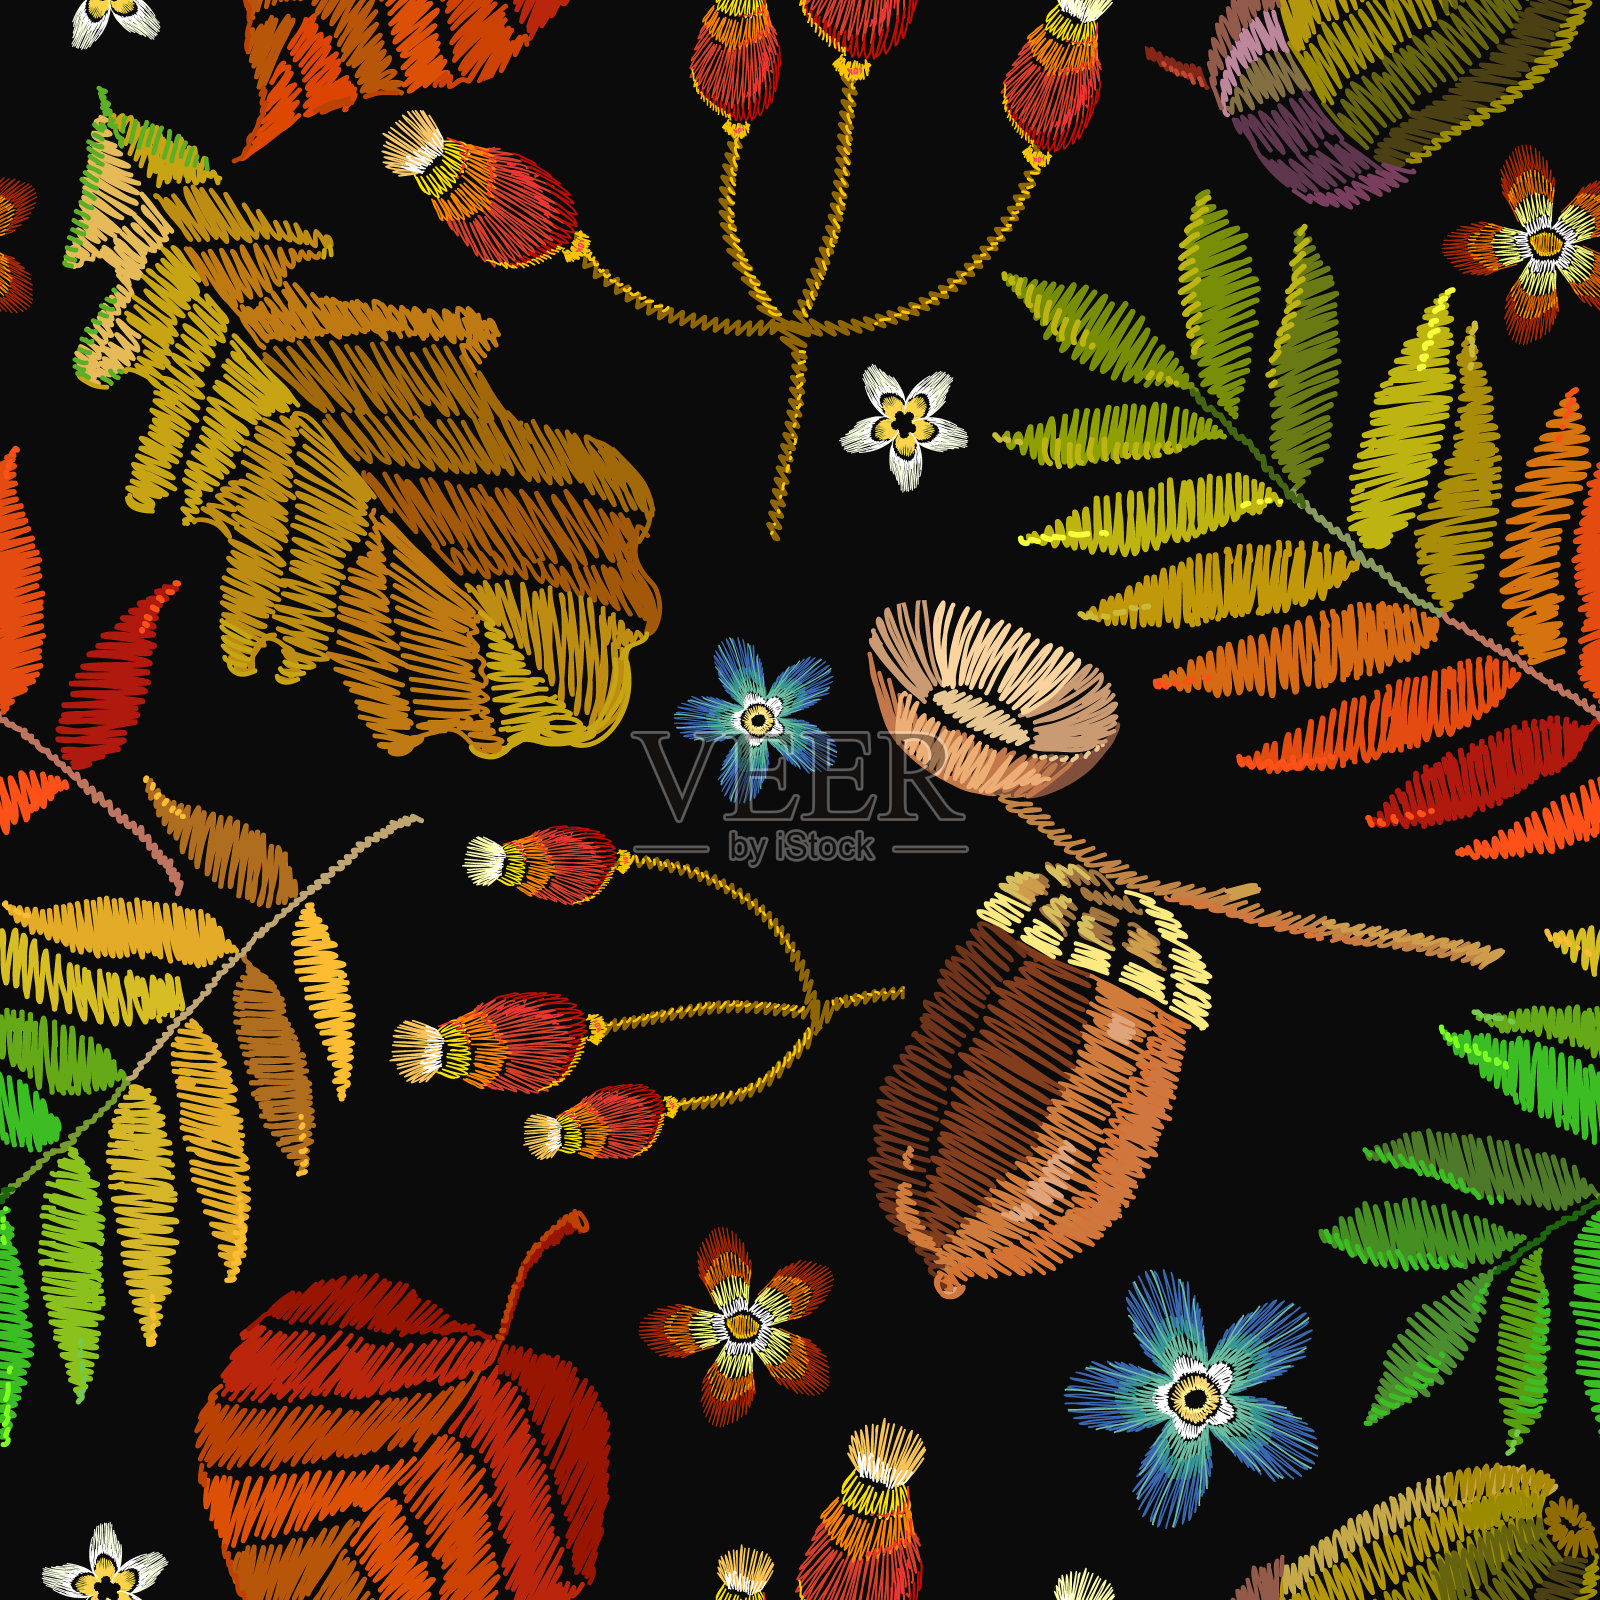 彩色秋树手绘图案矢量无缝背景素材 Vector seamless pattern with colorful autumn trees – 设计小咖